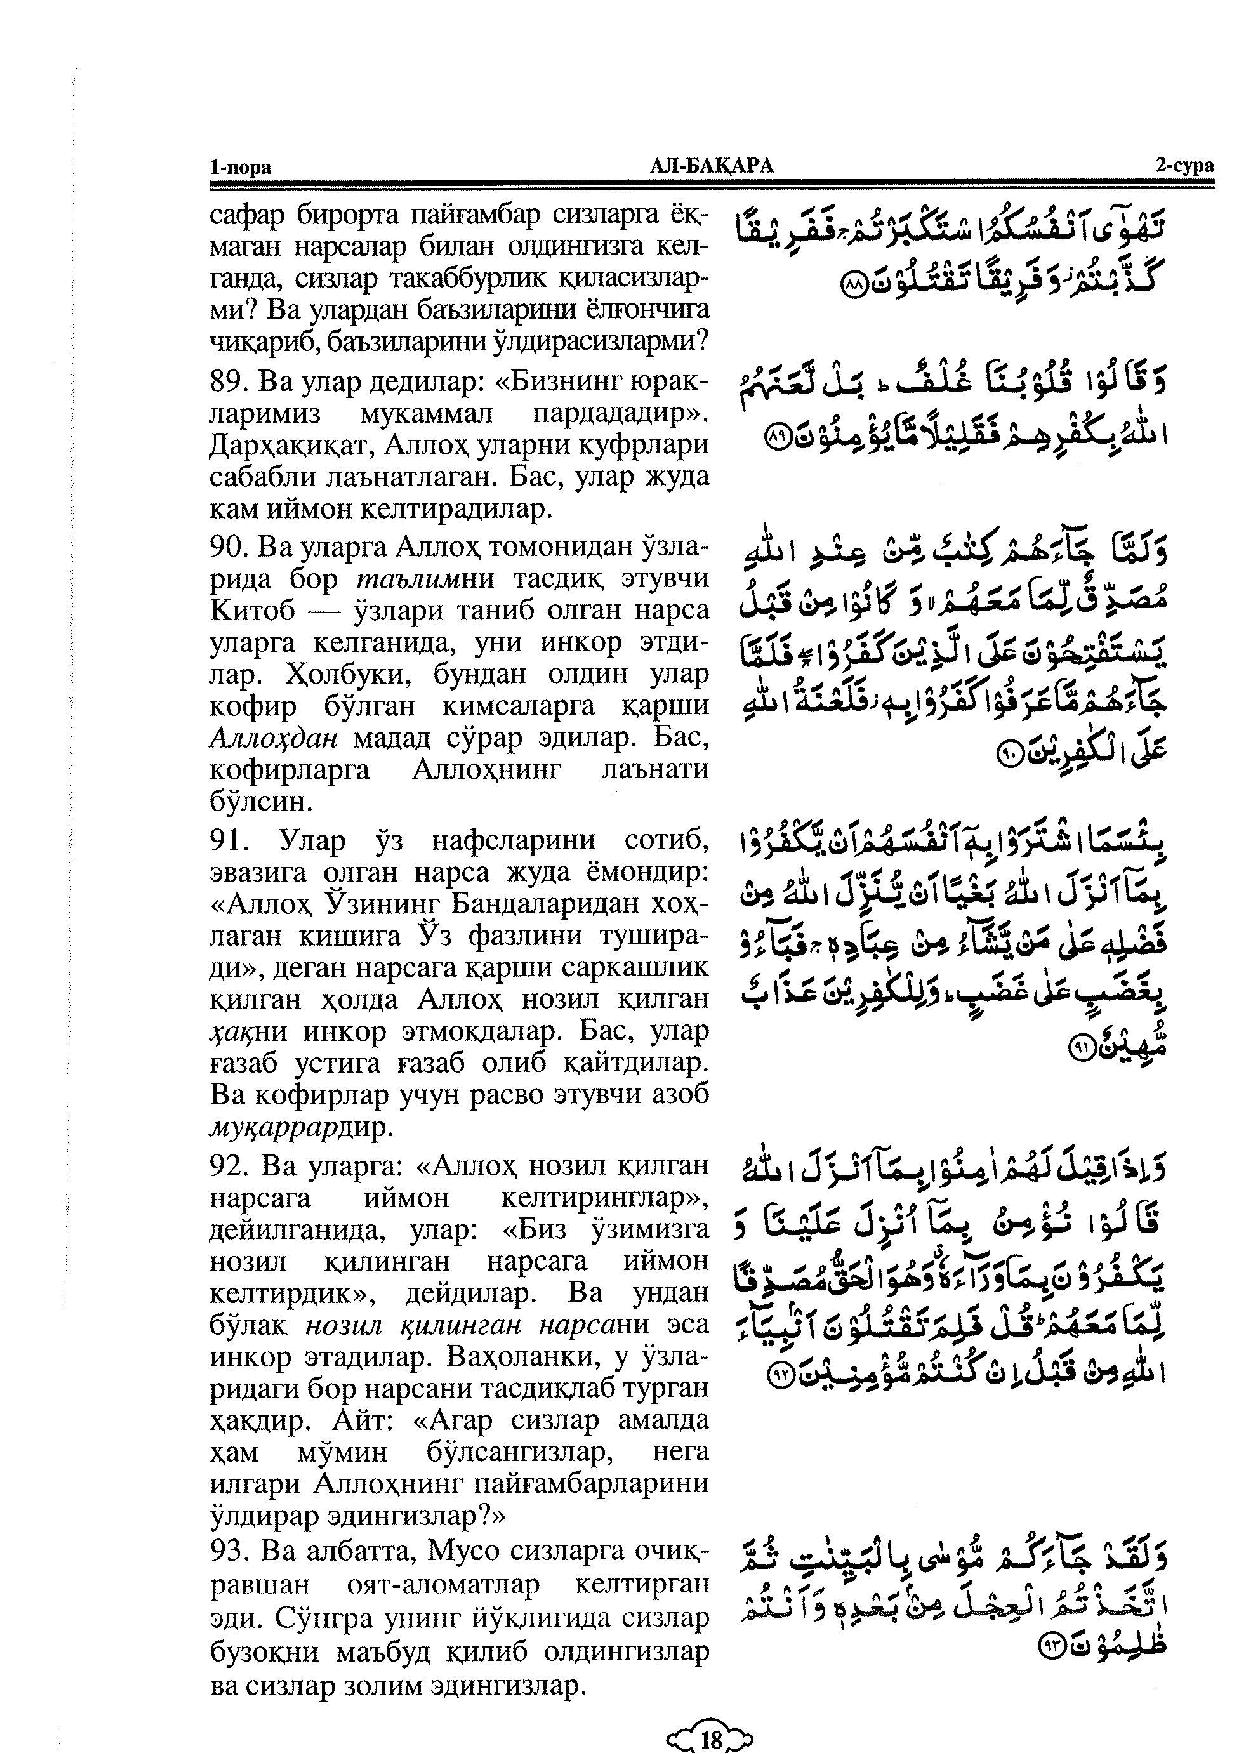 002-al-baqarah-page-016